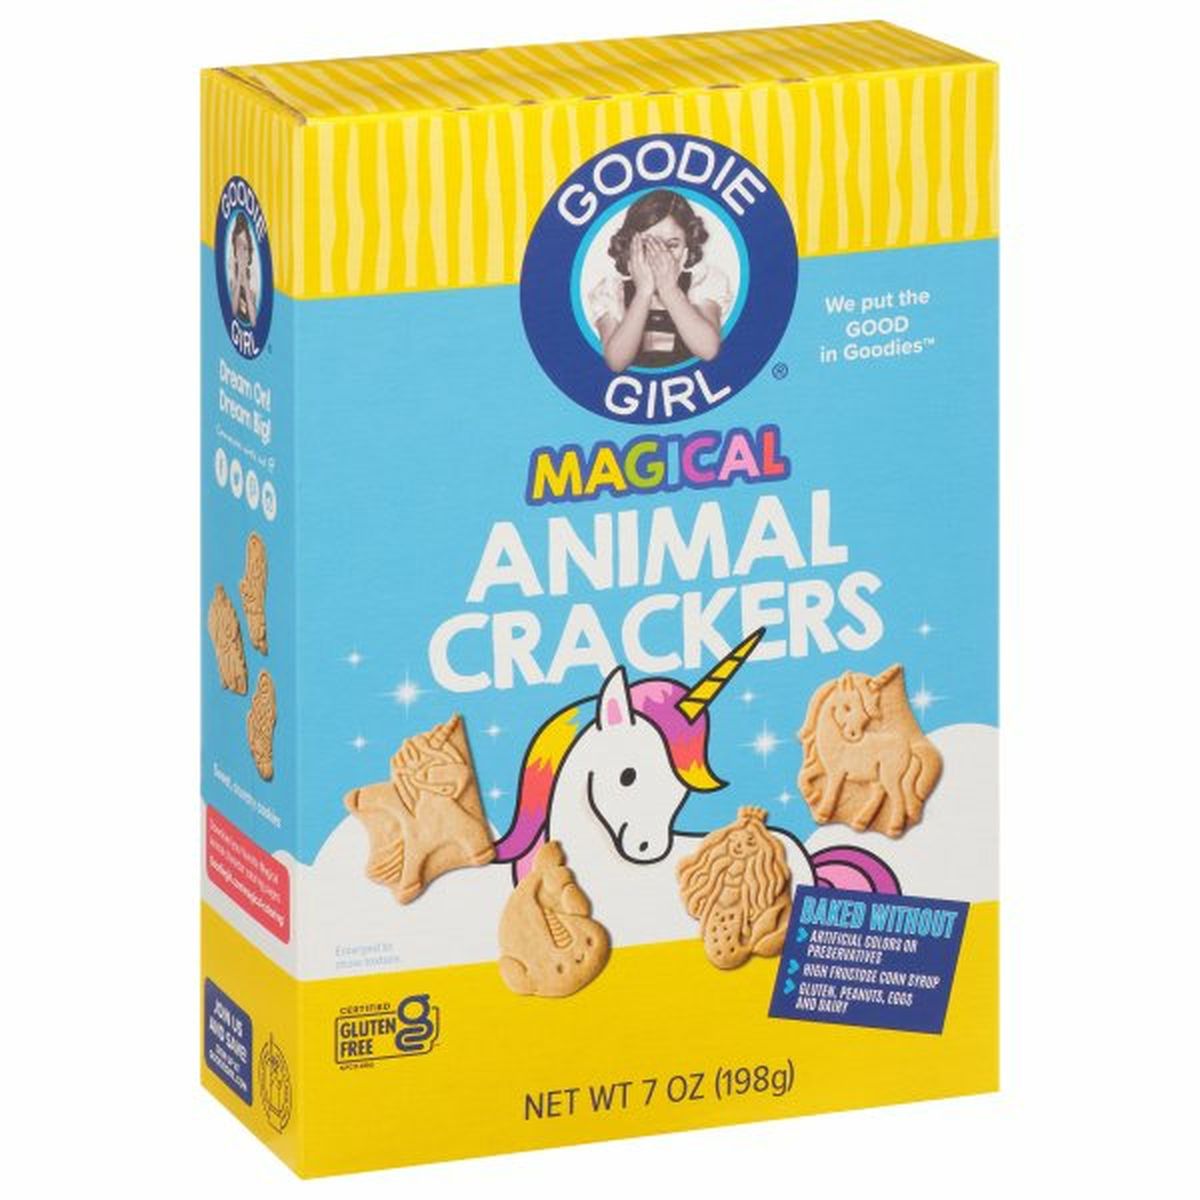 Calories in Goodie Girl Cookies Animal Crackers, Magical